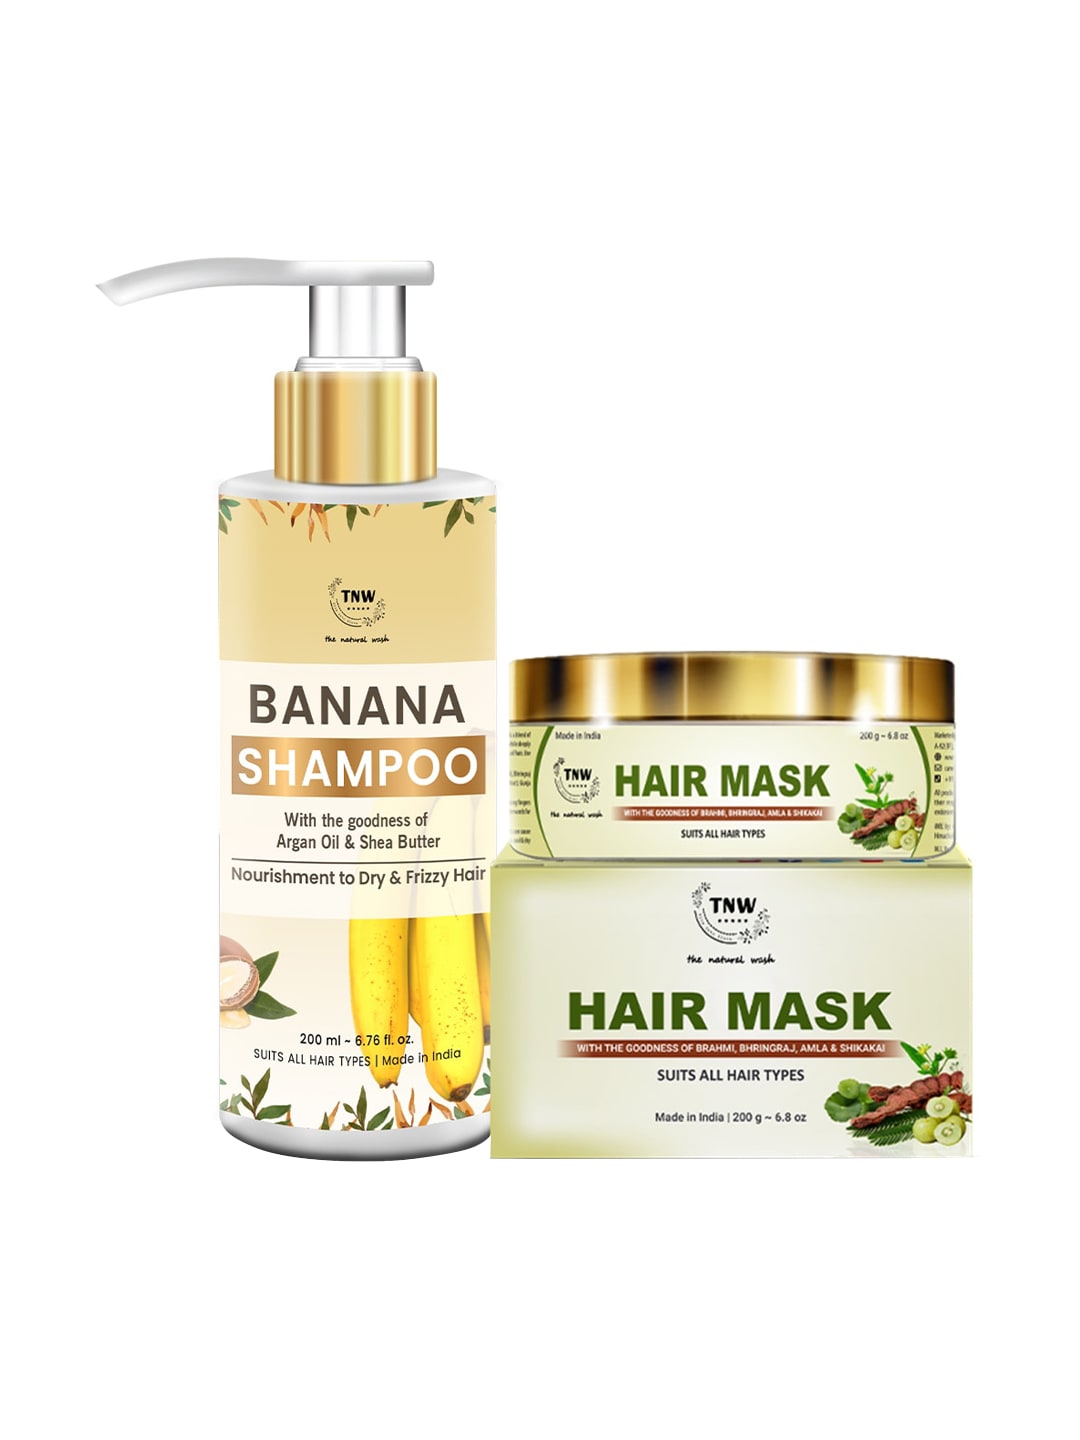 TNW the natural wash White Amla Hair Mask & Banana Shampoo Hair Care Kit Price in India